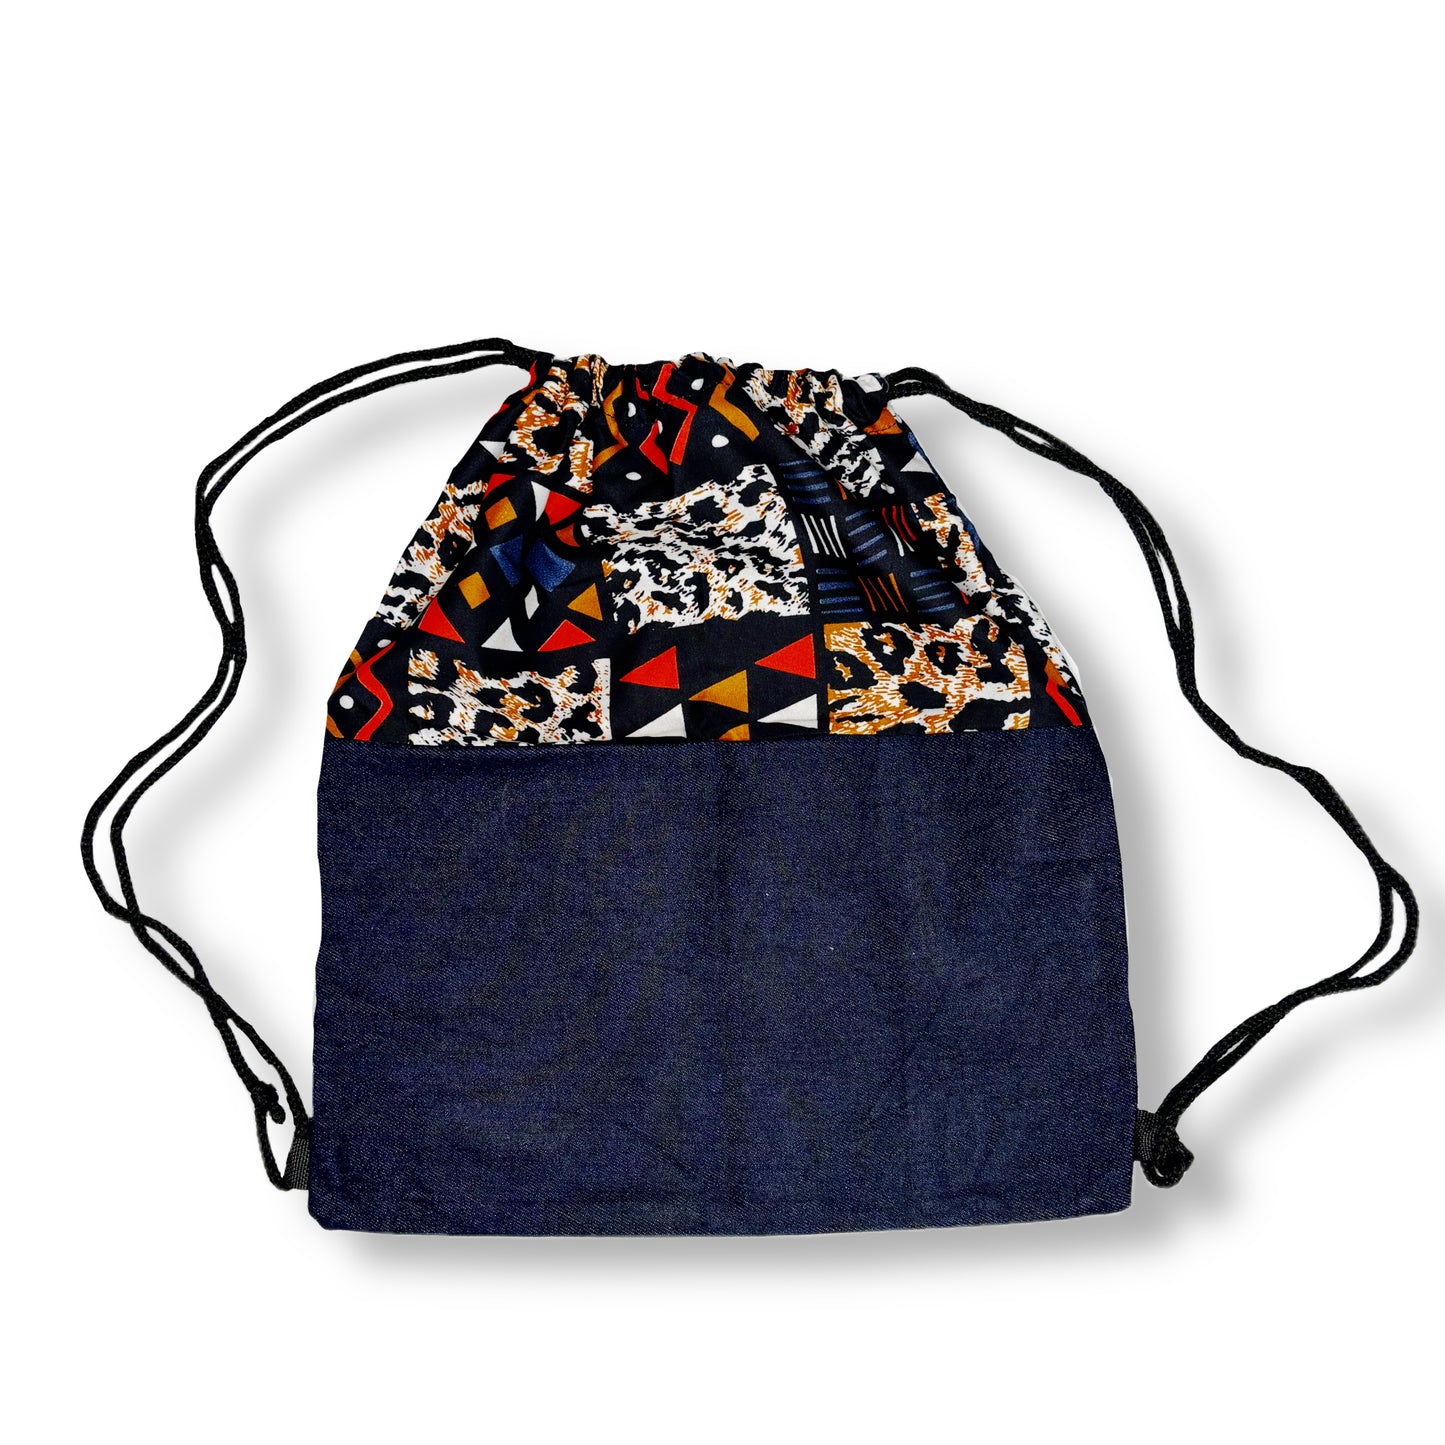 Native drawstring bag